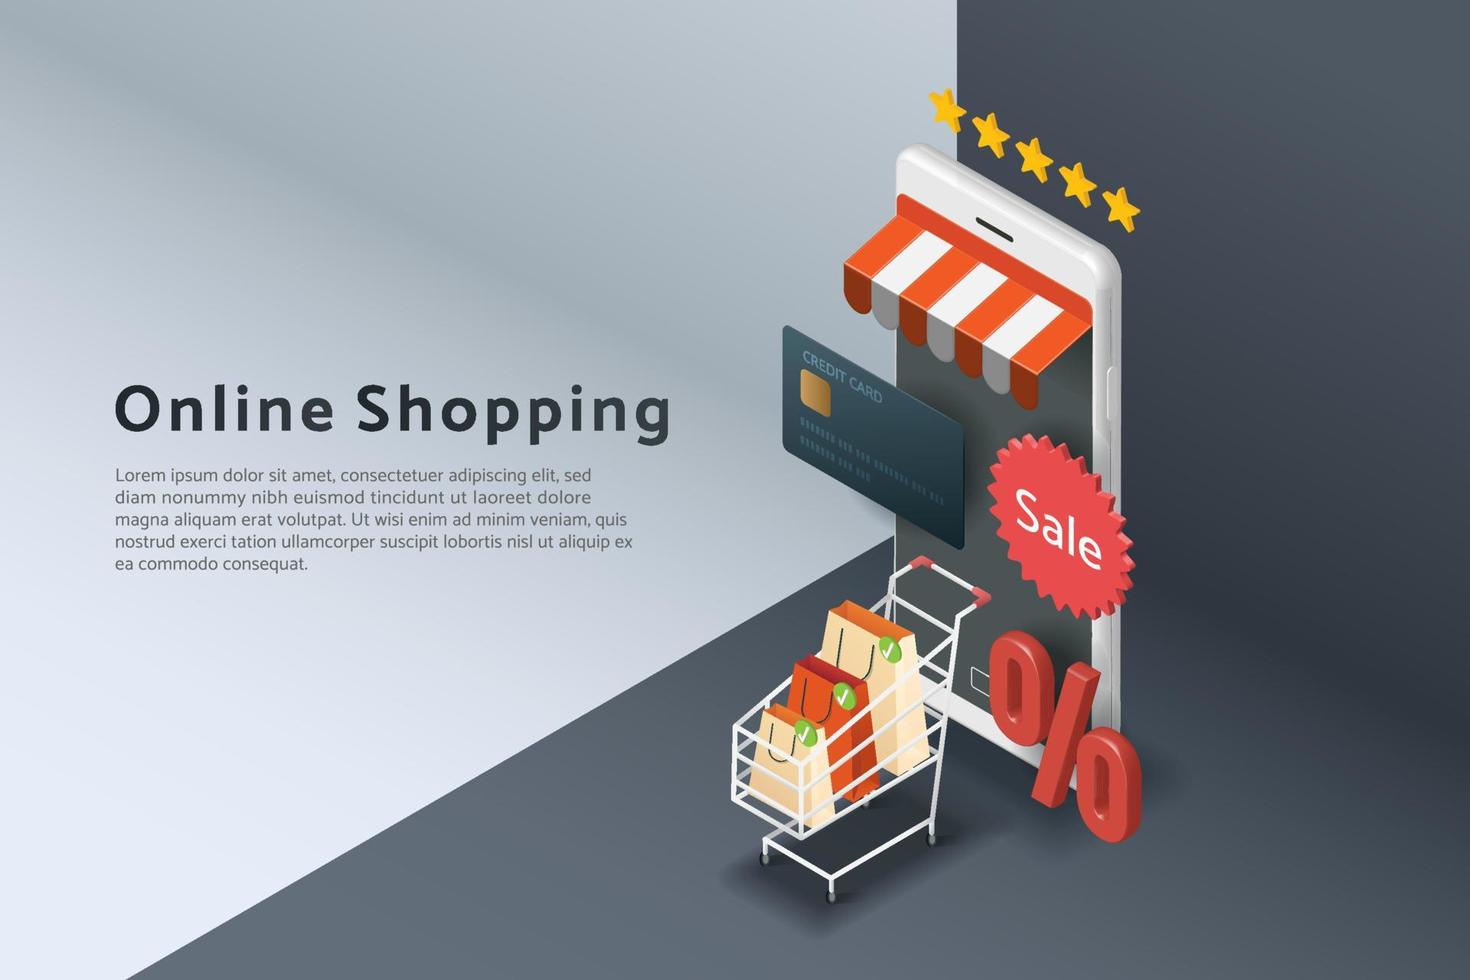 Online shopping via smartphone, online store discount vector